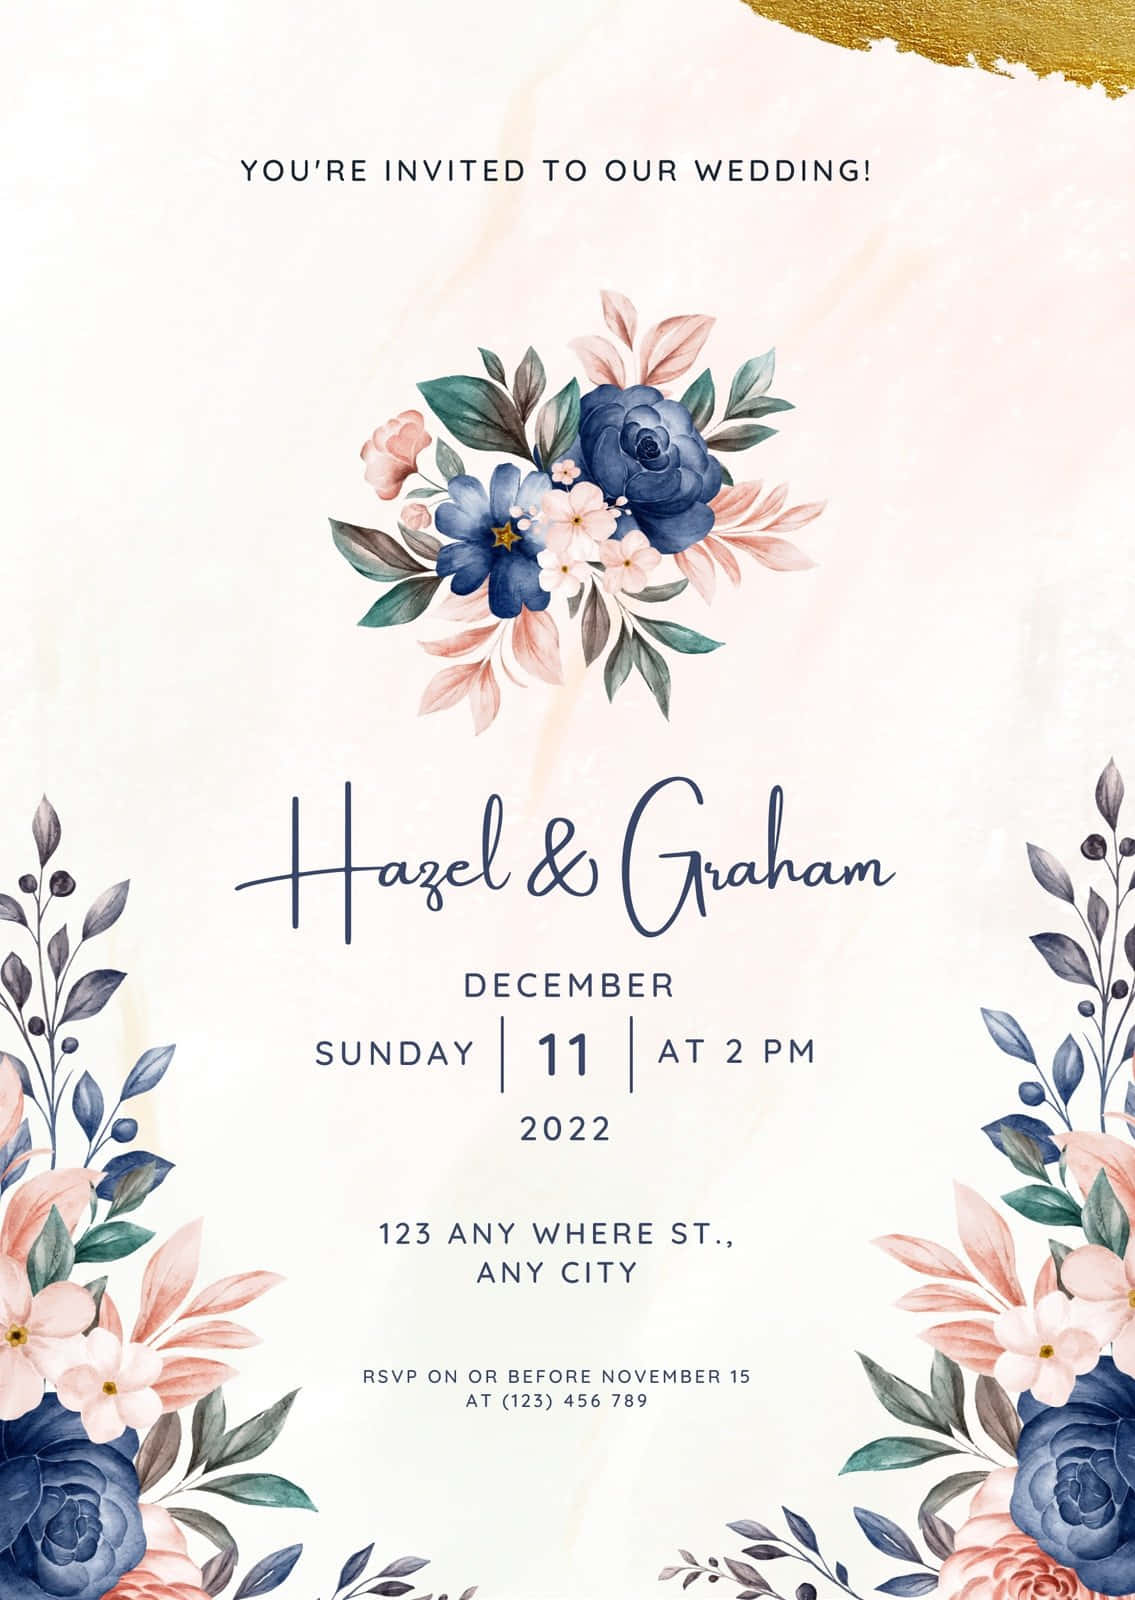 Rustic Floral Wedding Invitation Background